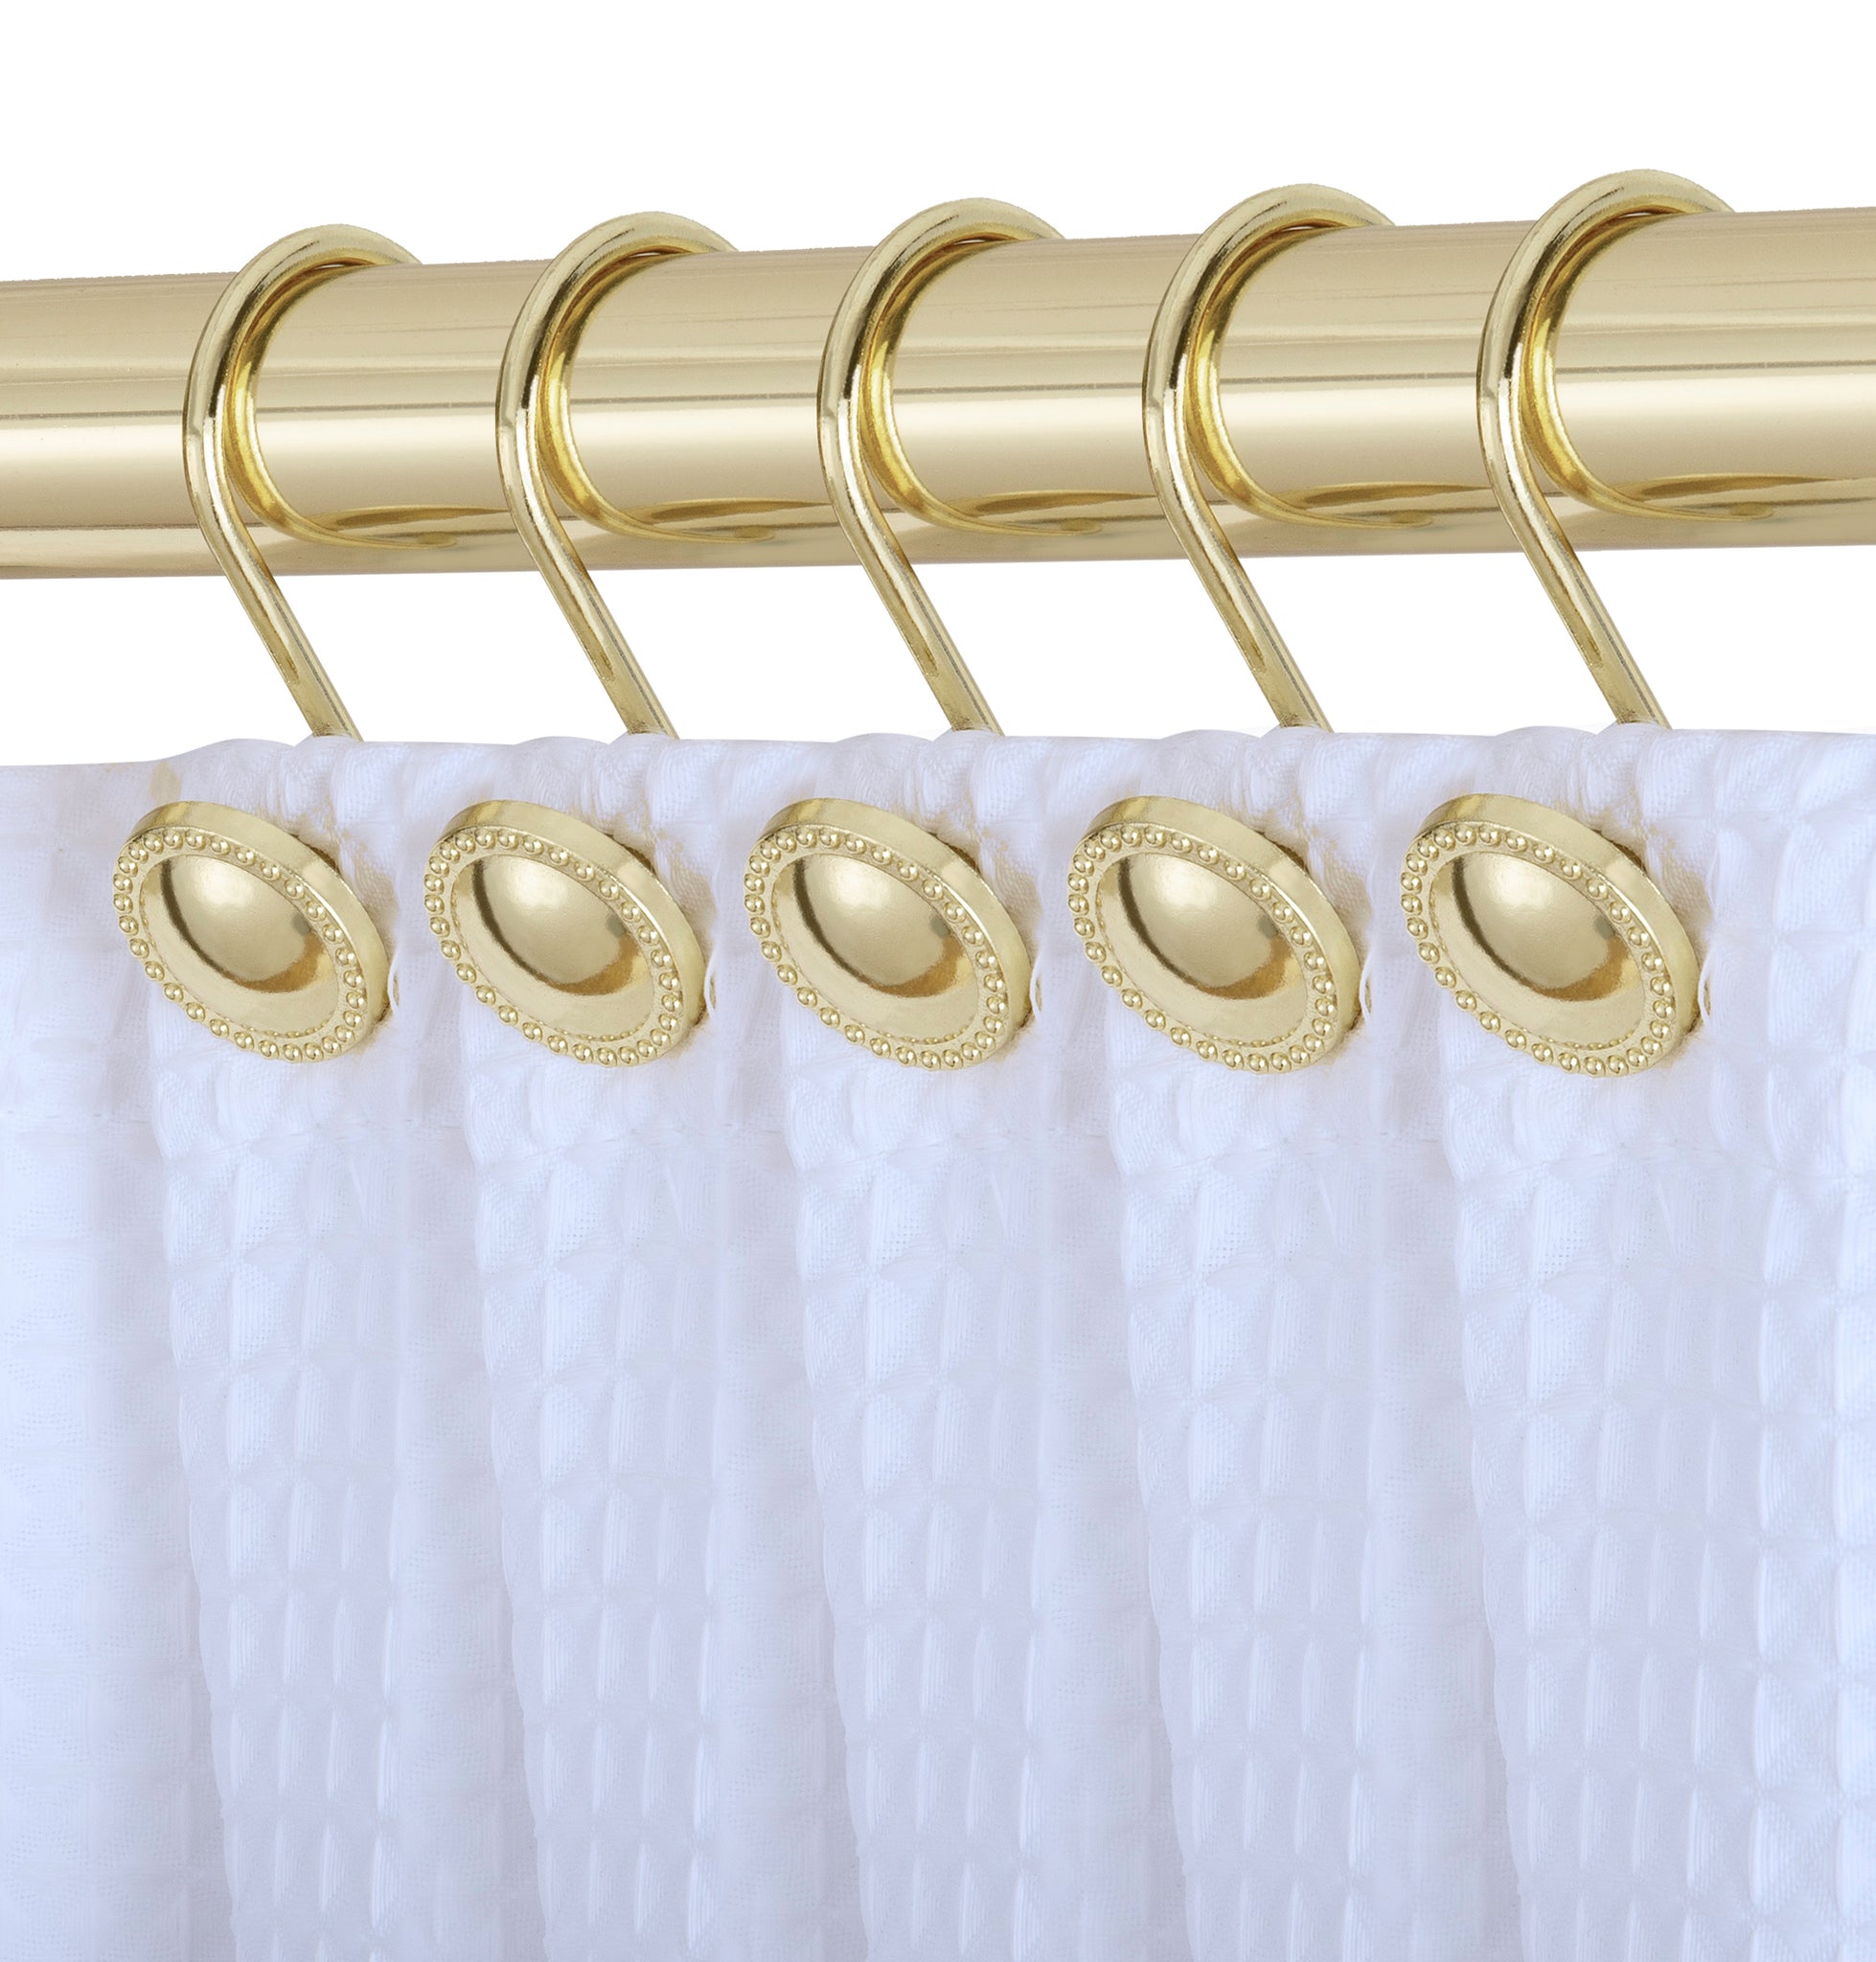 Utopia Alley HK13XX Shower Rings Hooks, Shower Curtain Rings Hooks for Bathroom, Rustproof Zinc Shower Curtain Hooks Rings, Set of 12, Chrome/Oil Rubbed Bronze/Brushed Nickel/Black/Gold